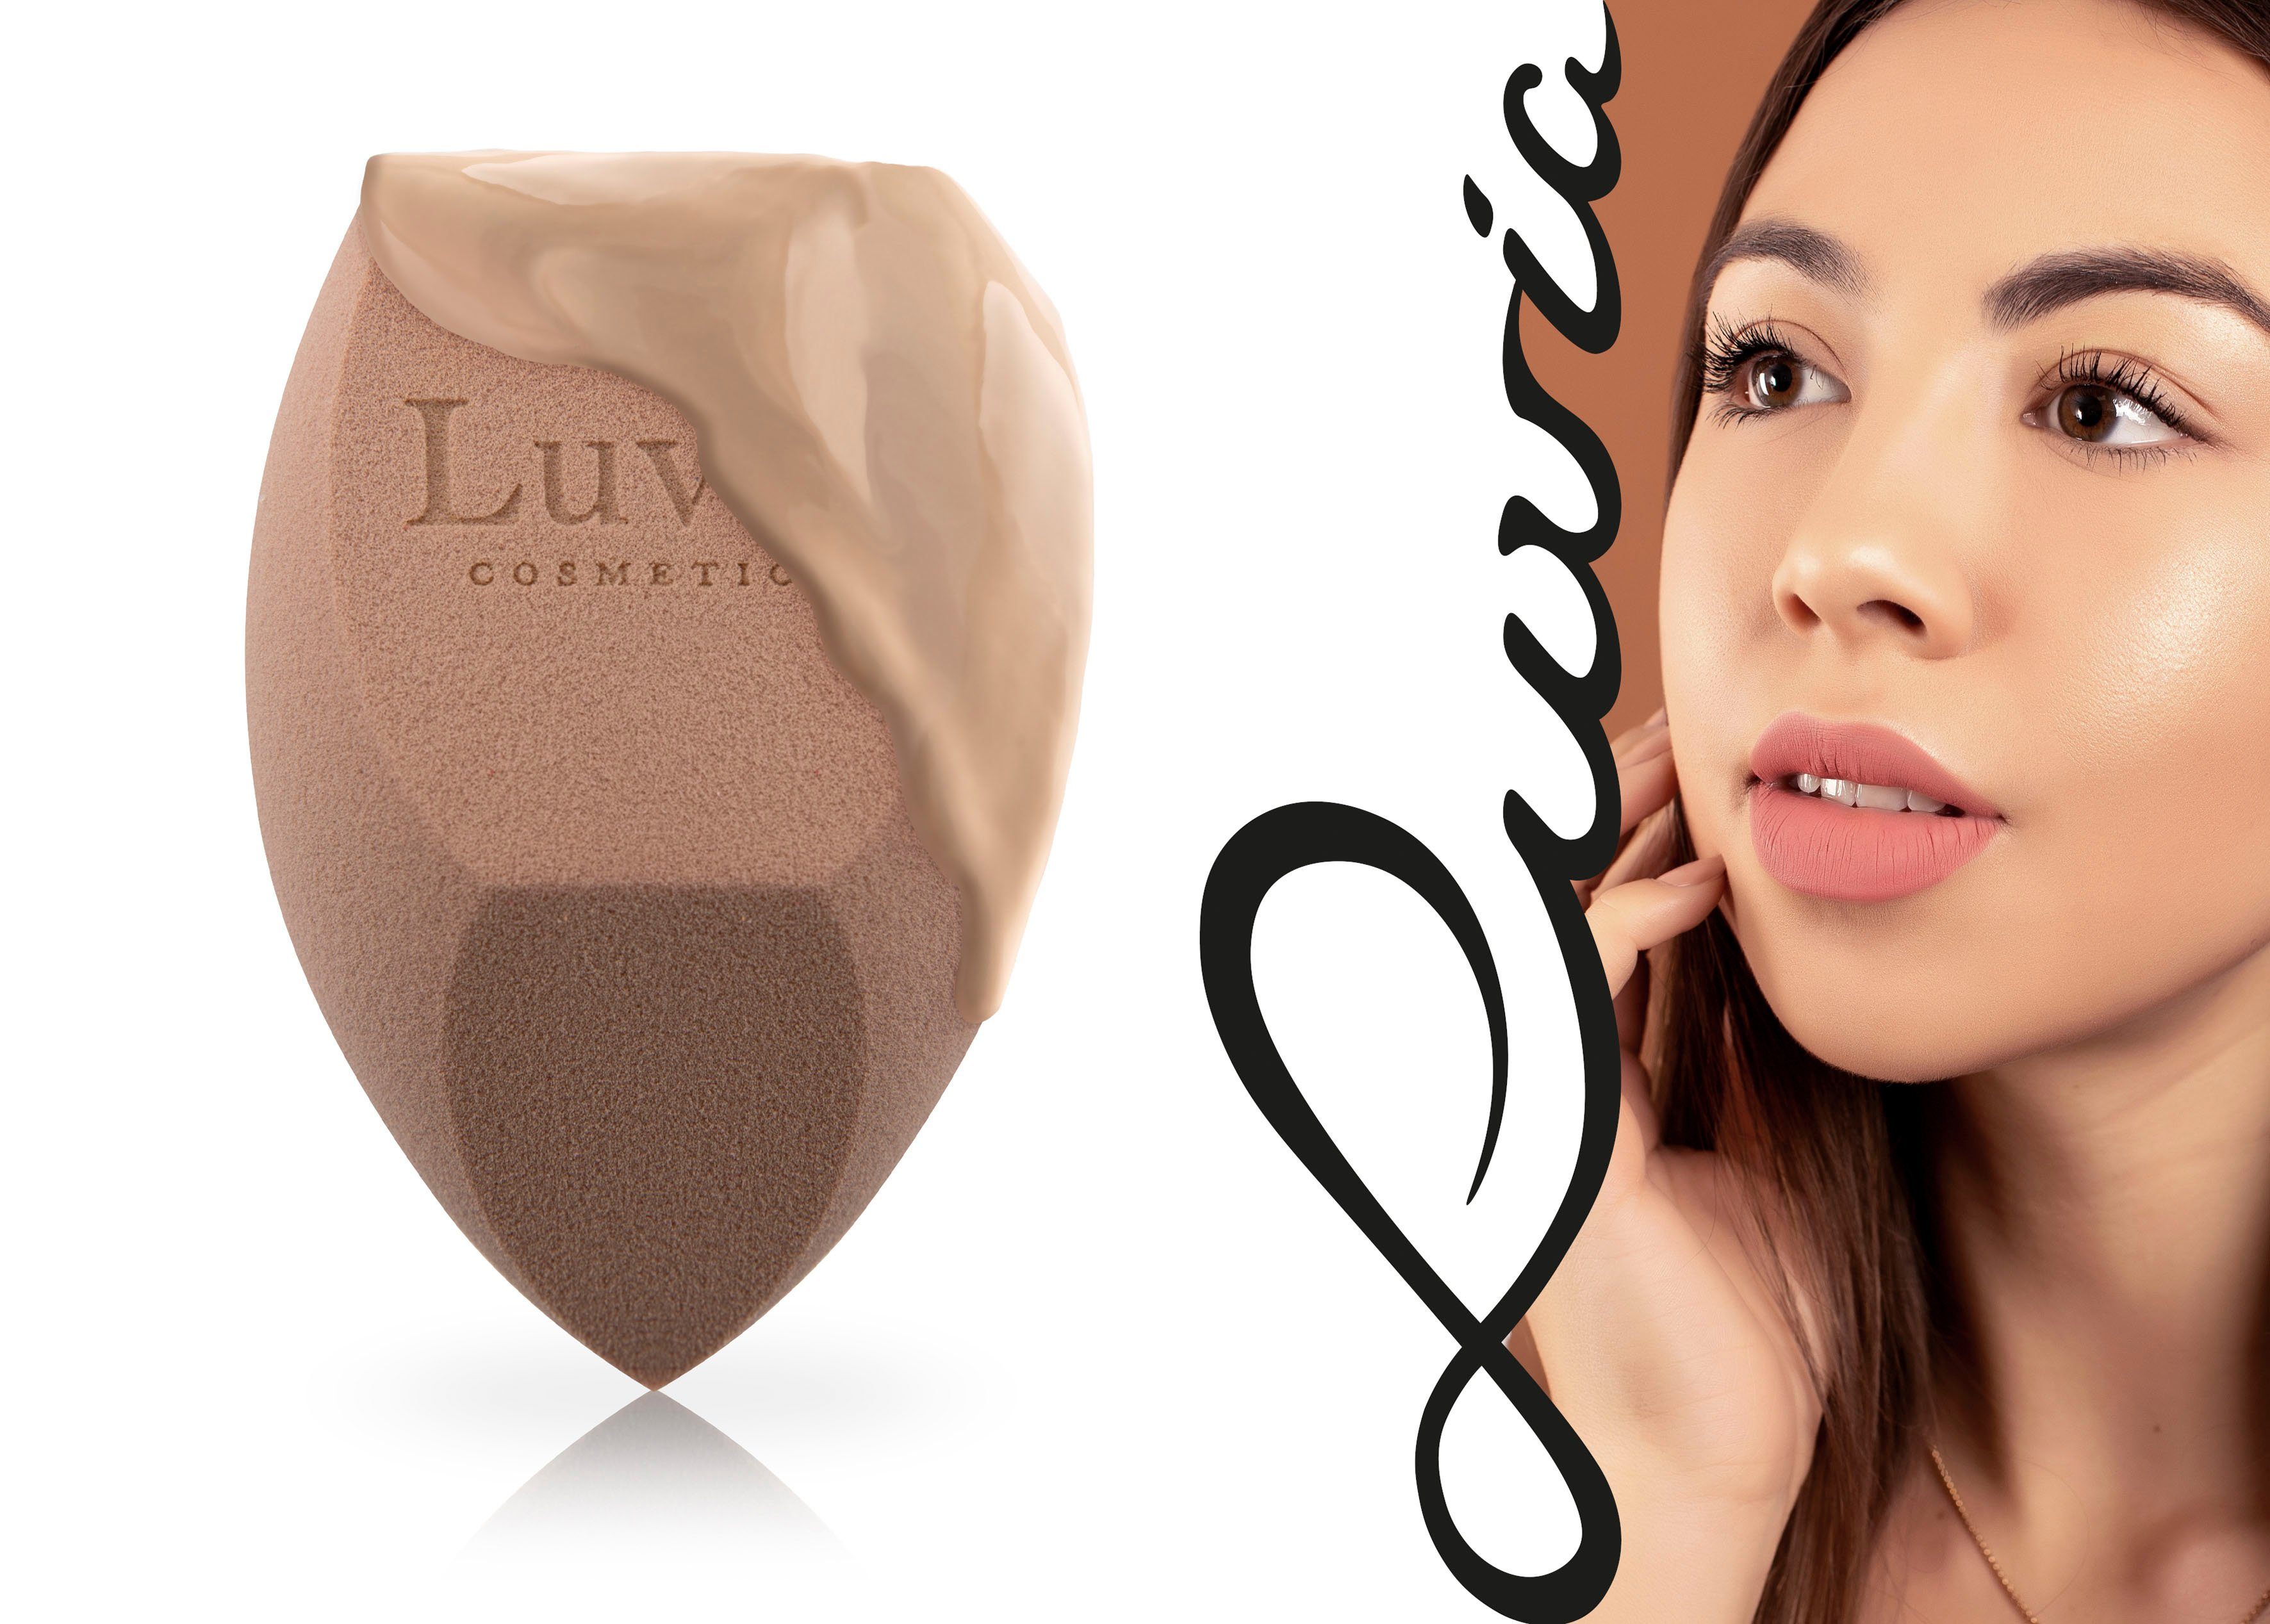 Luvia Cosmetics Make-up Schwamm Prime Body Sponge, Make-up XXL Vegan Schwamm